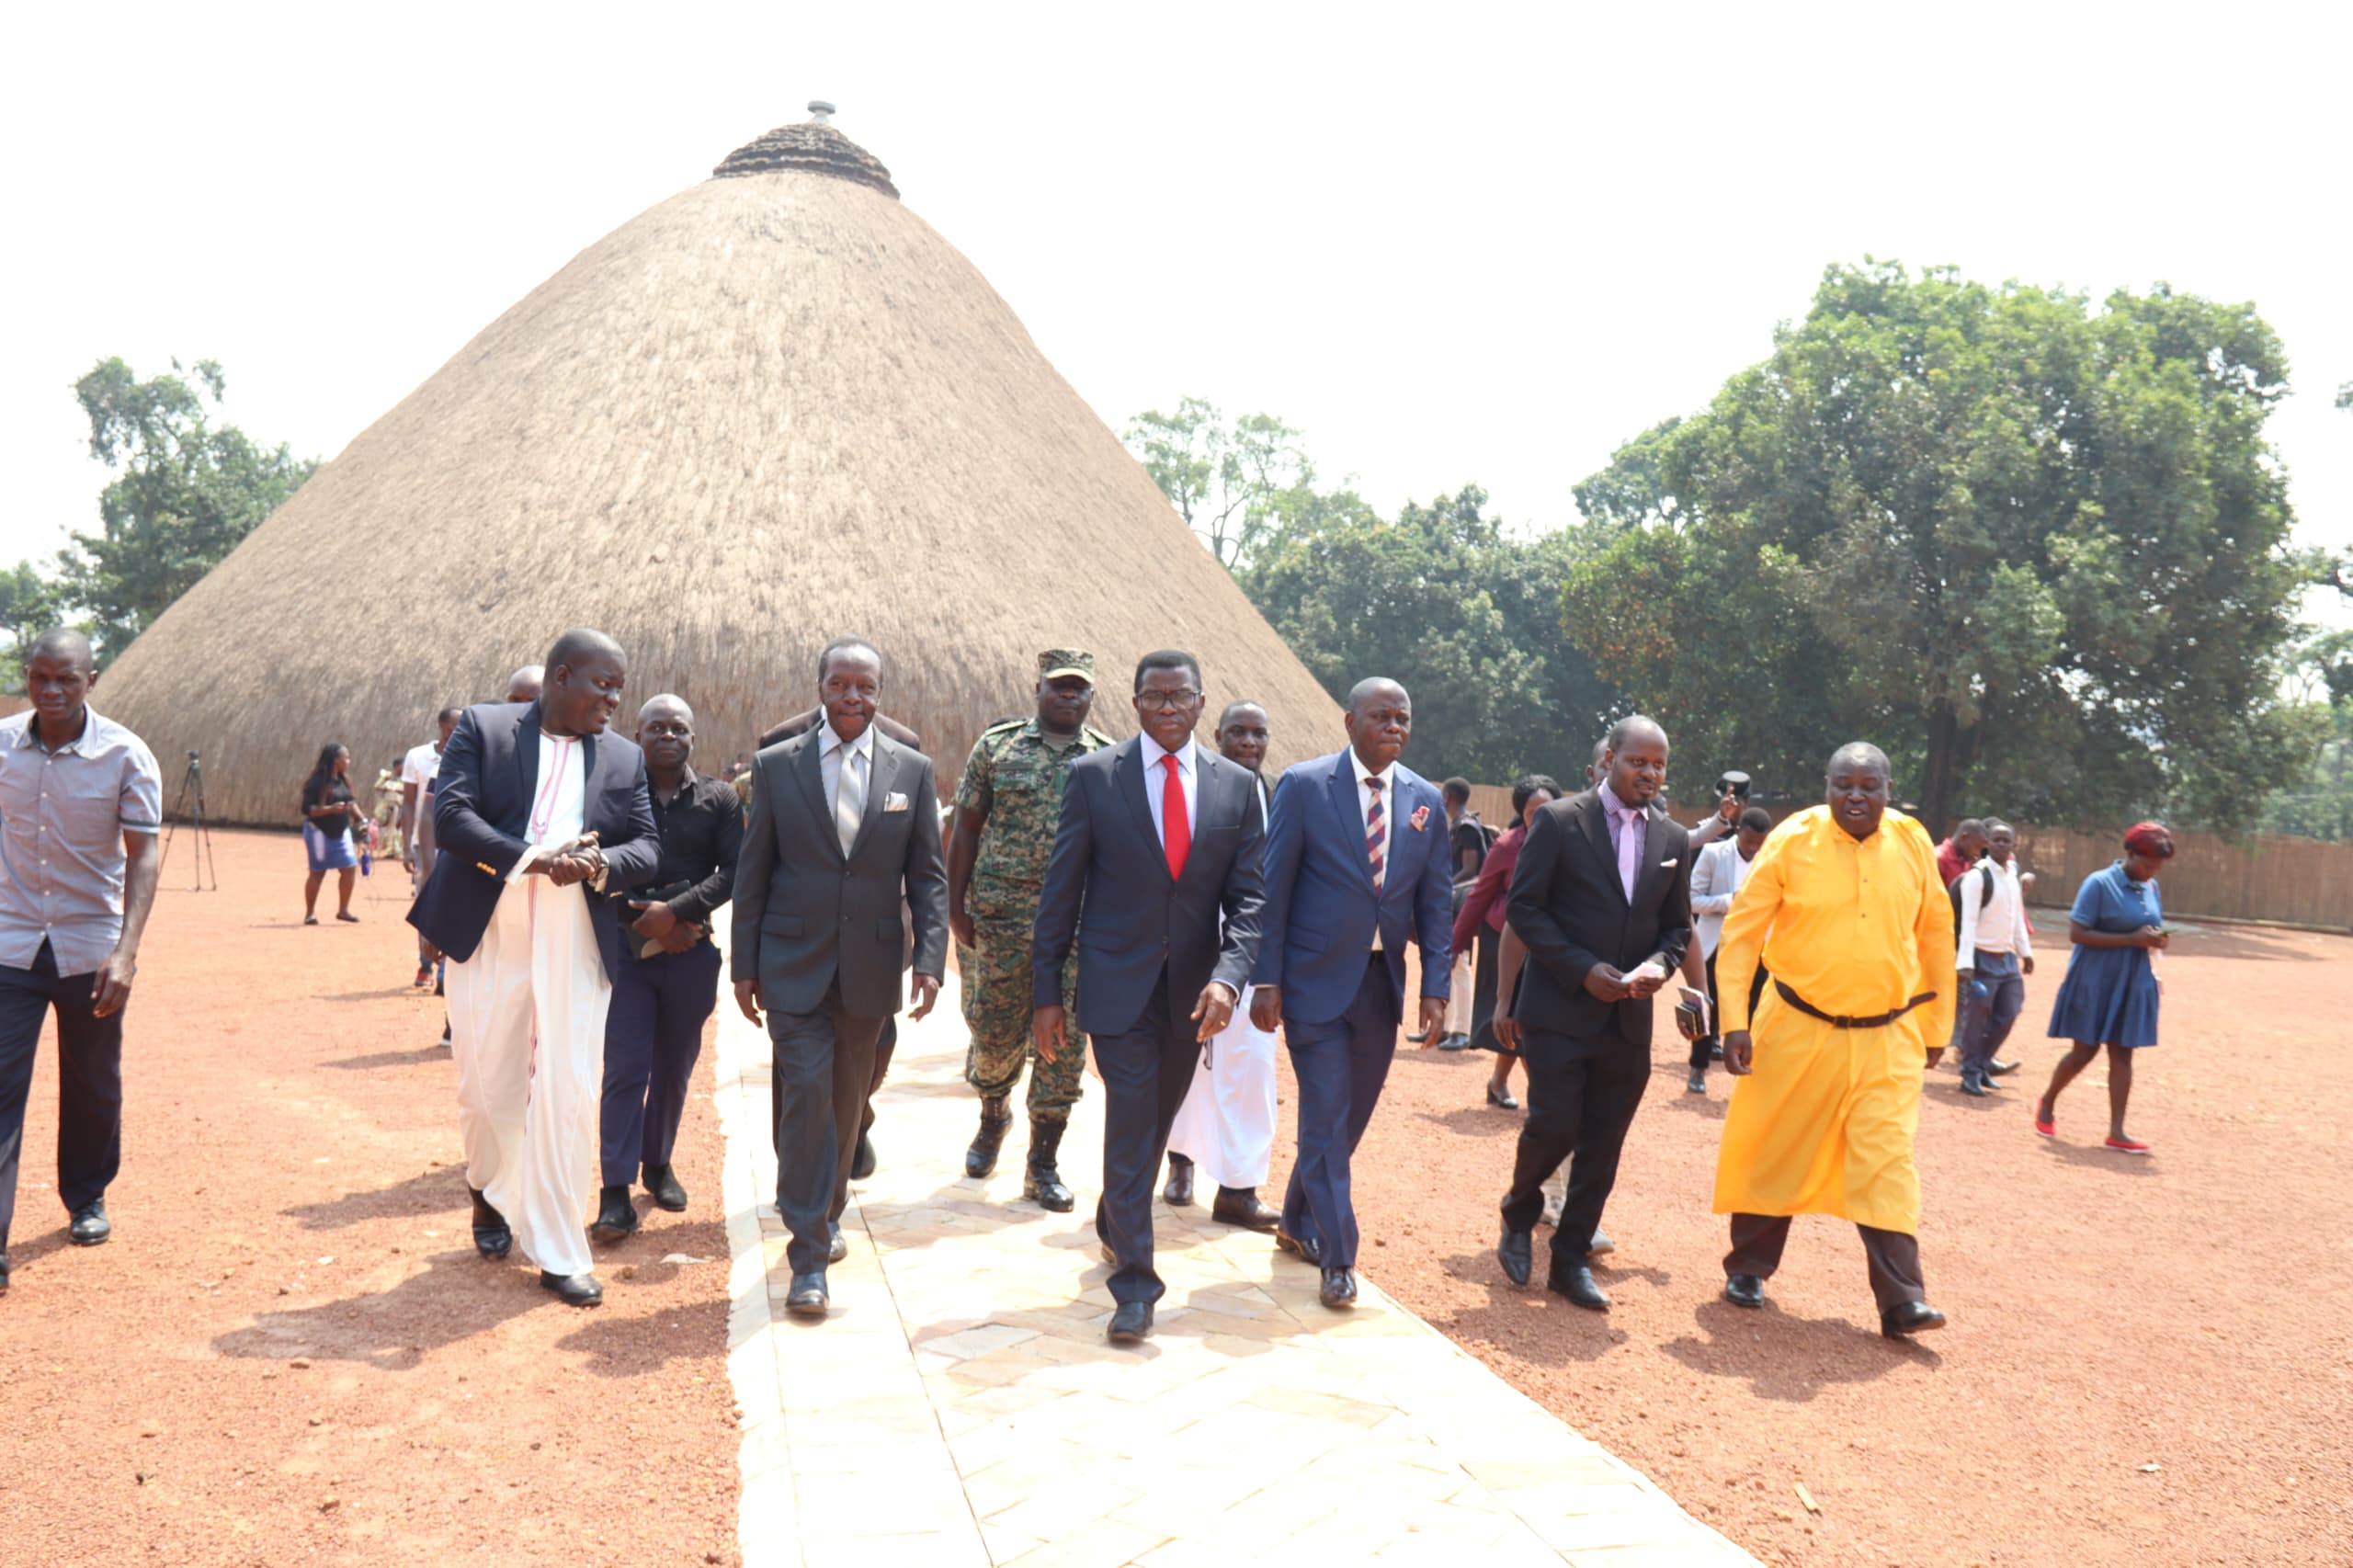 Kasubi Tombs restoration 90% complete, Katikkiro says